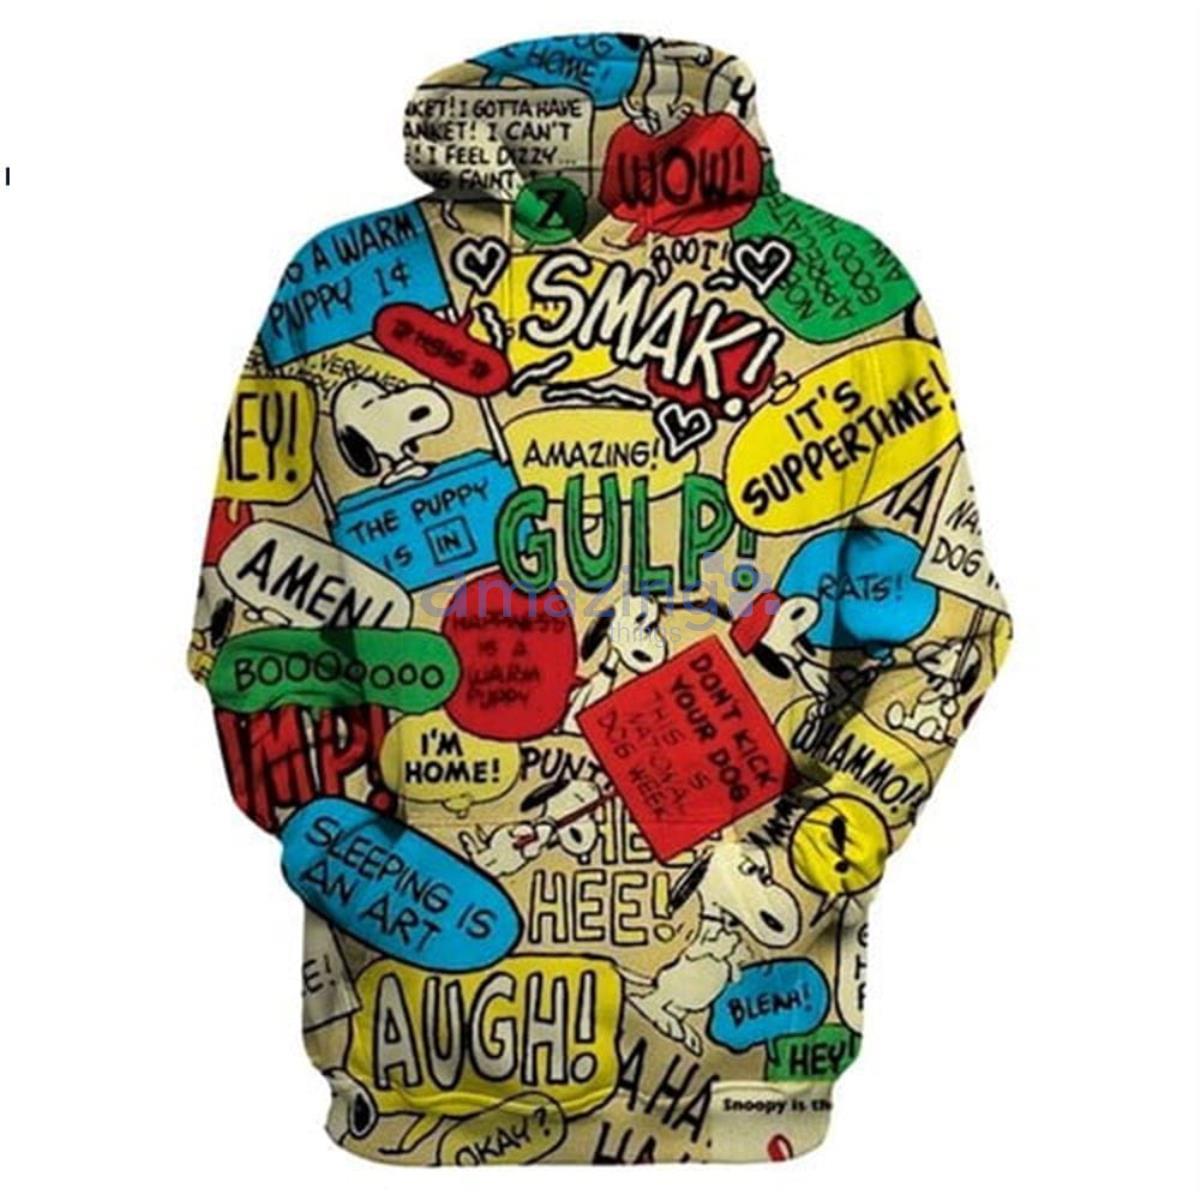 Original cool Snoopy Supreme Shirt, hoodie, sweater, long sleeve